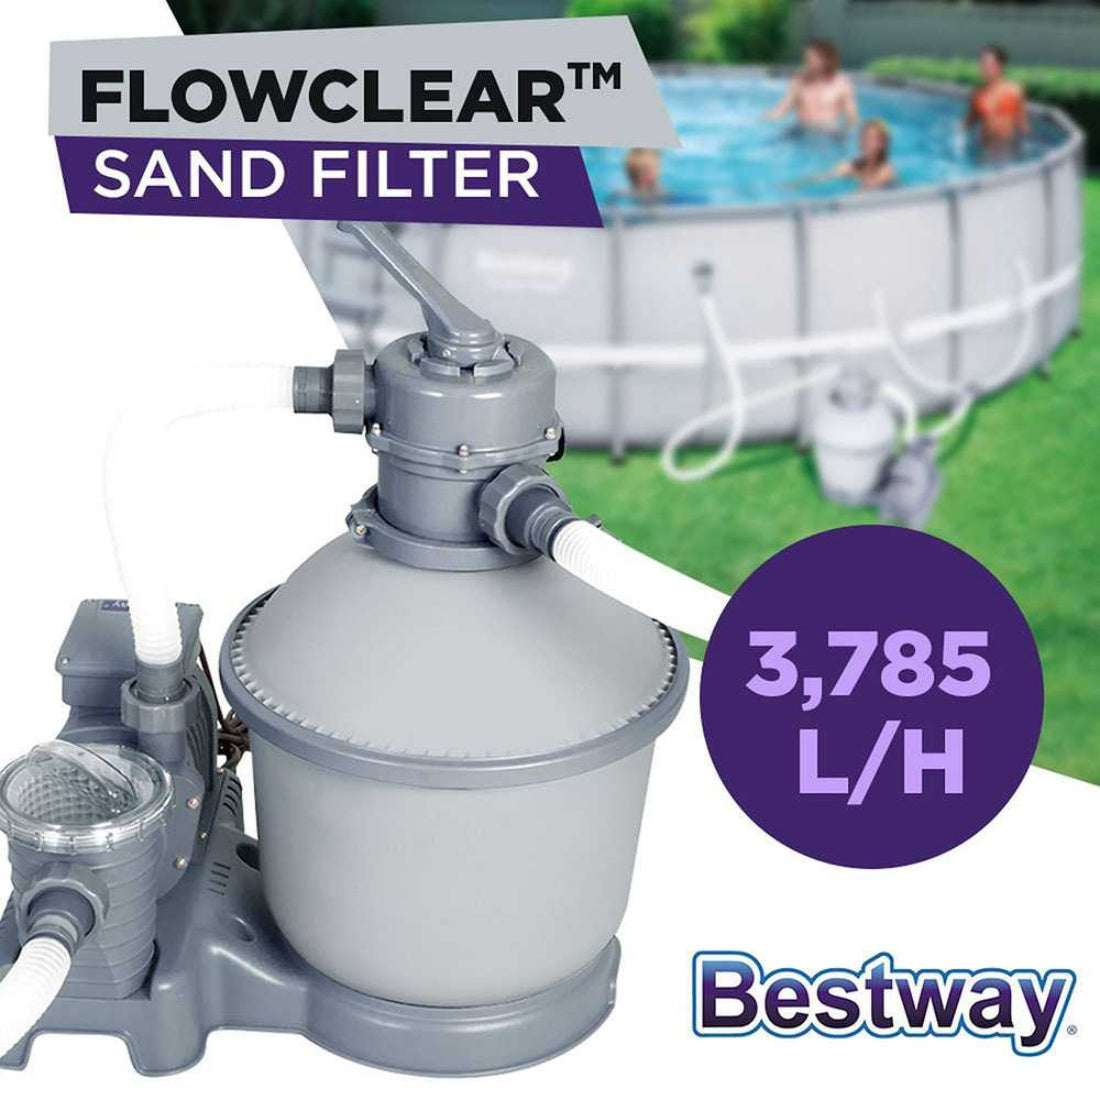 Bestway Flowclear Sand Filter 58400 Pump